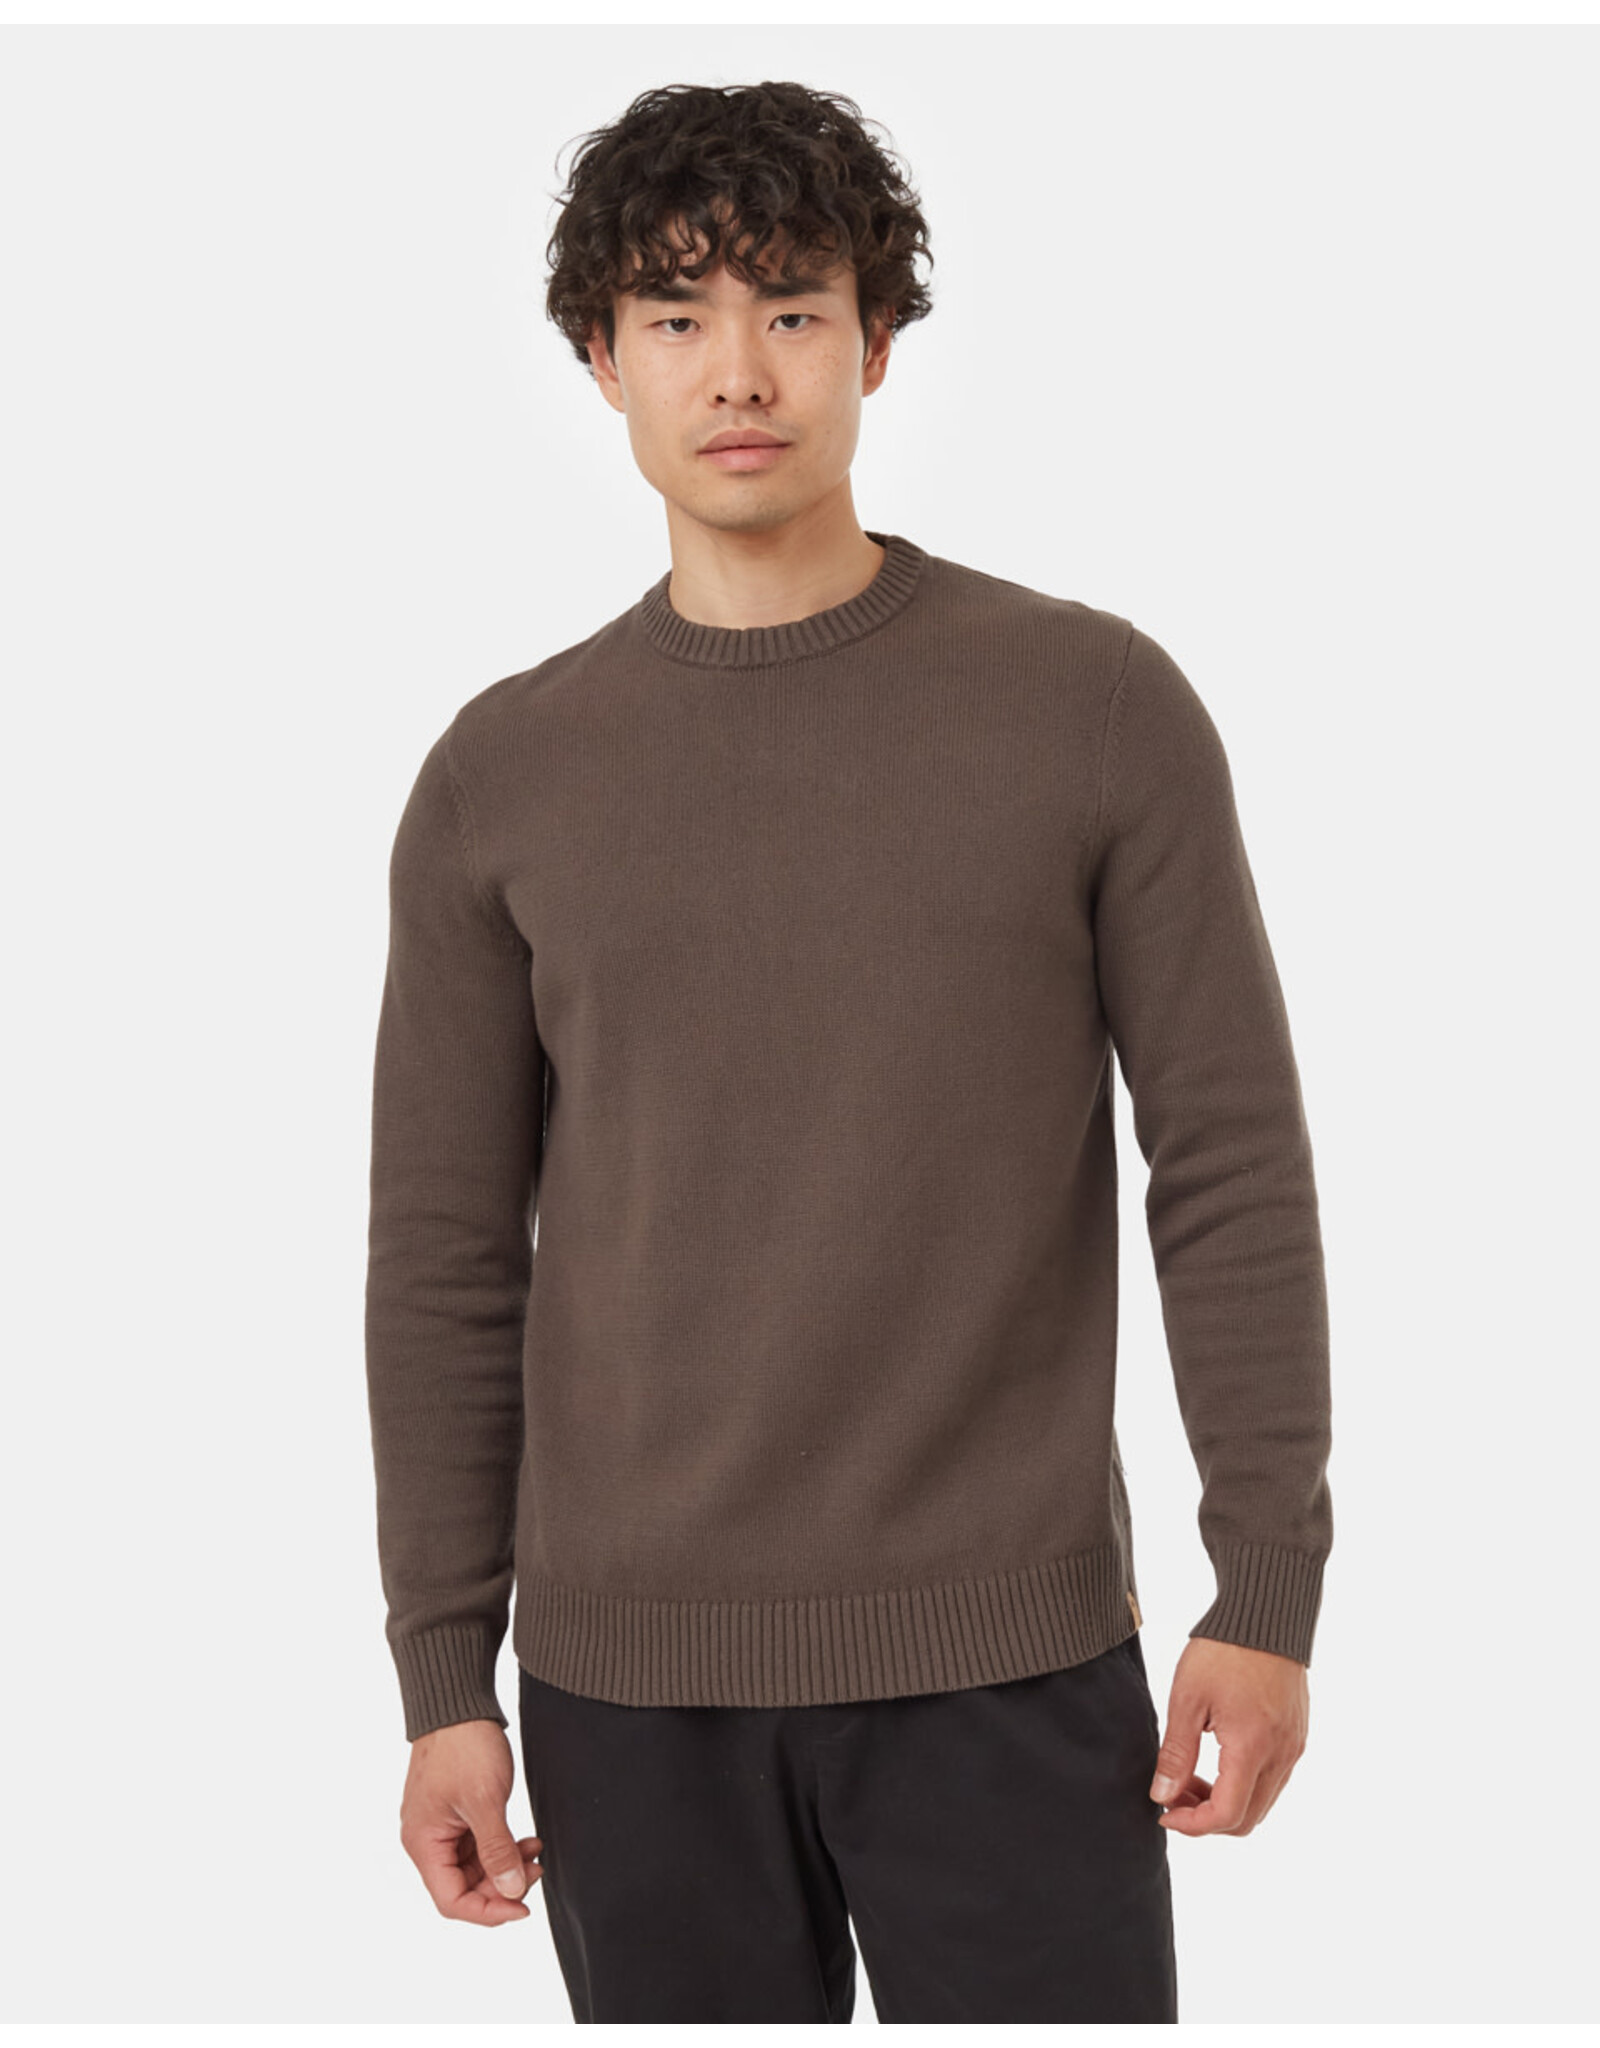 BGS Tentree - Crew Sweater / Brown